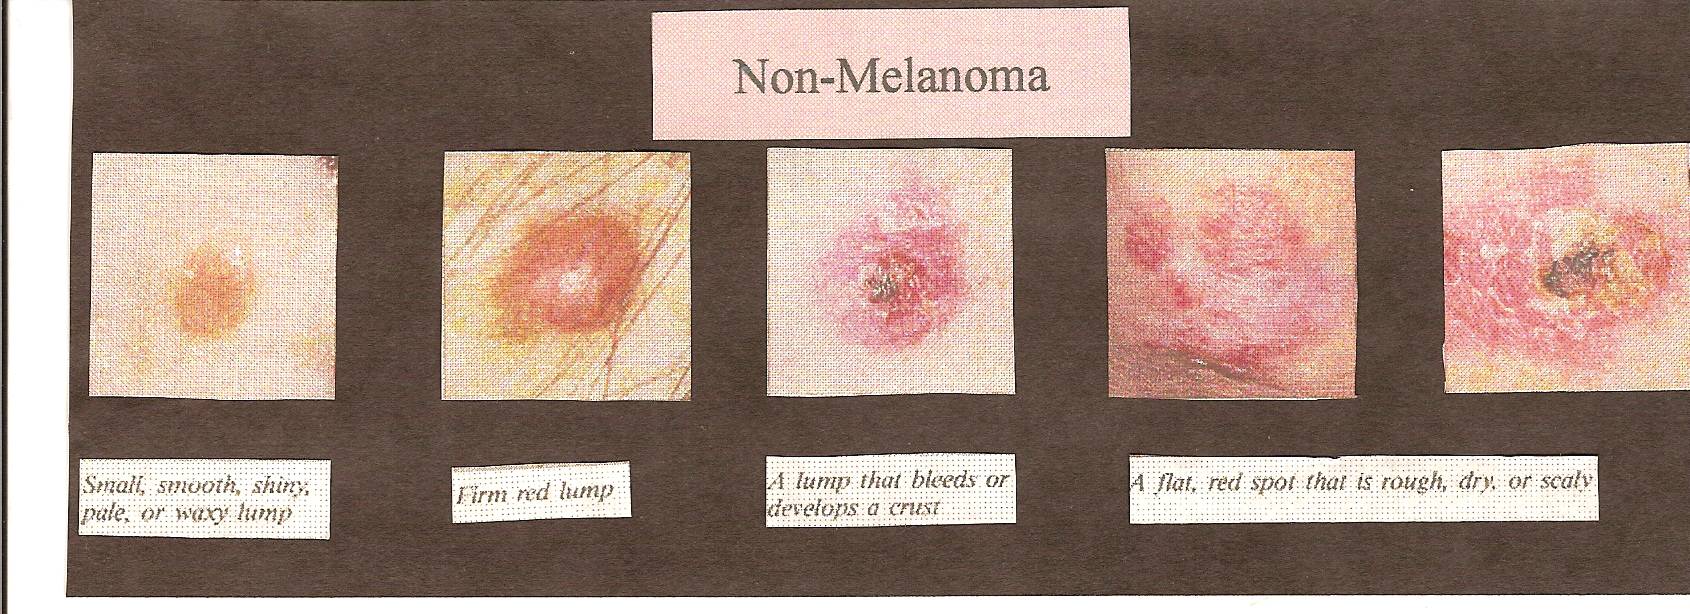 Pictures designed to show types of non melanomas